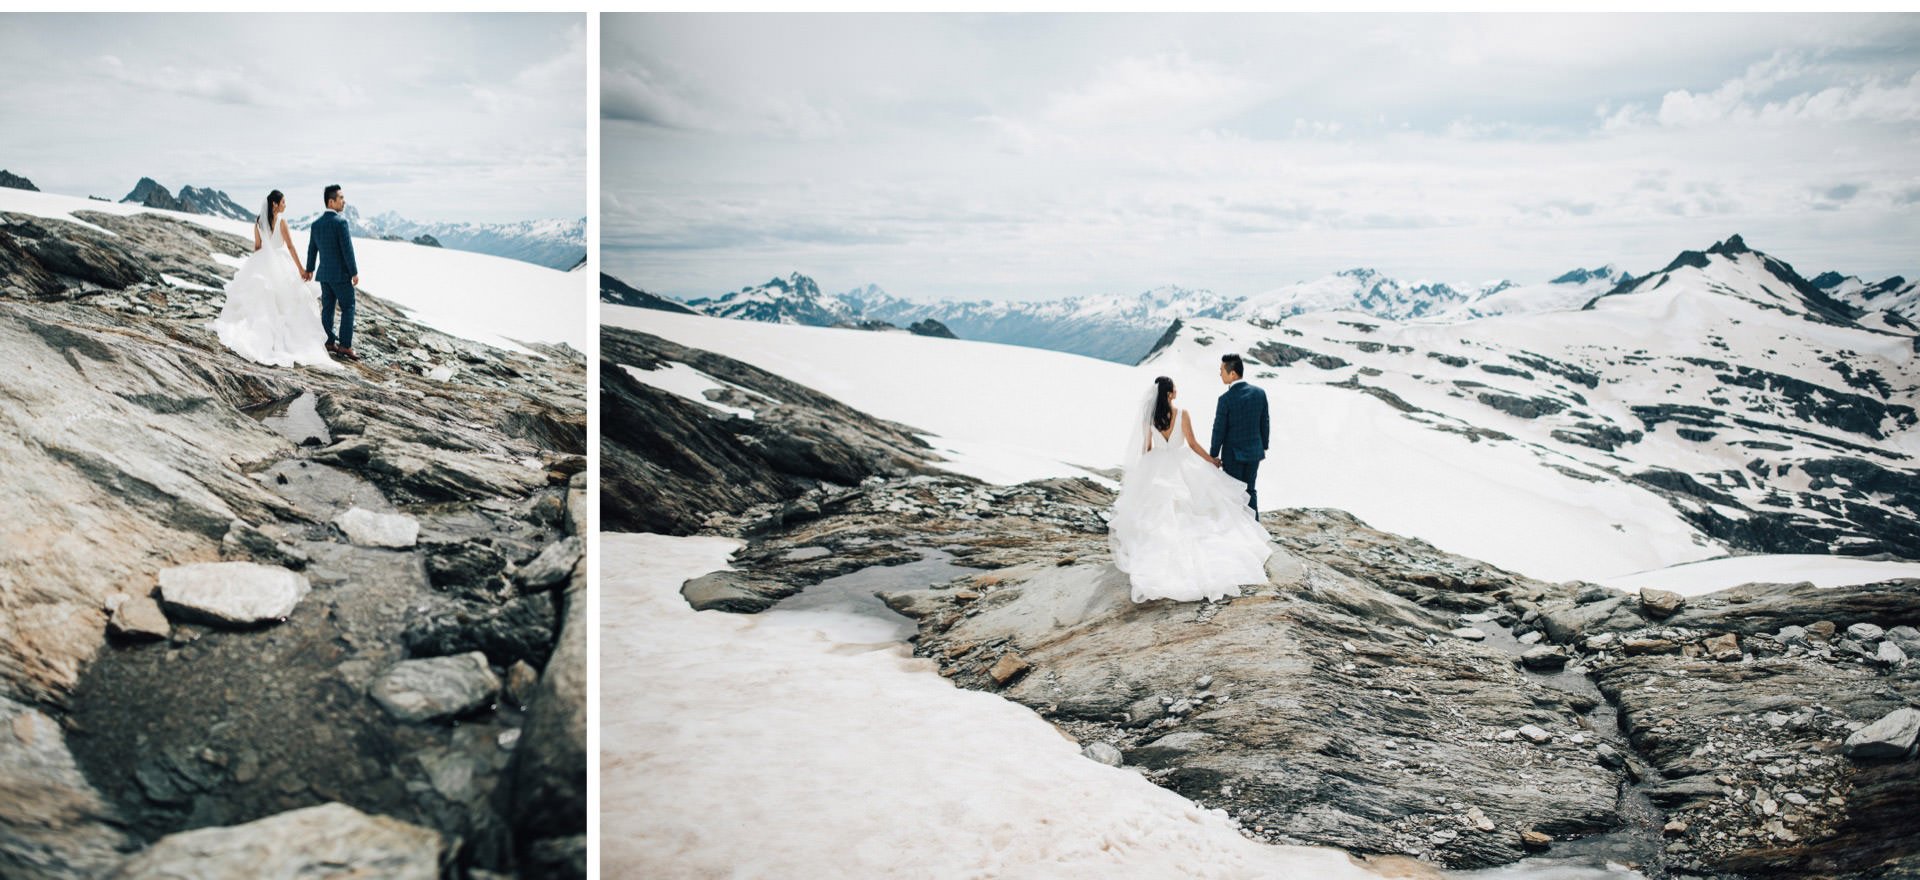 012_Isobel-Glacier-Pre-Wedding-Photography.jpg